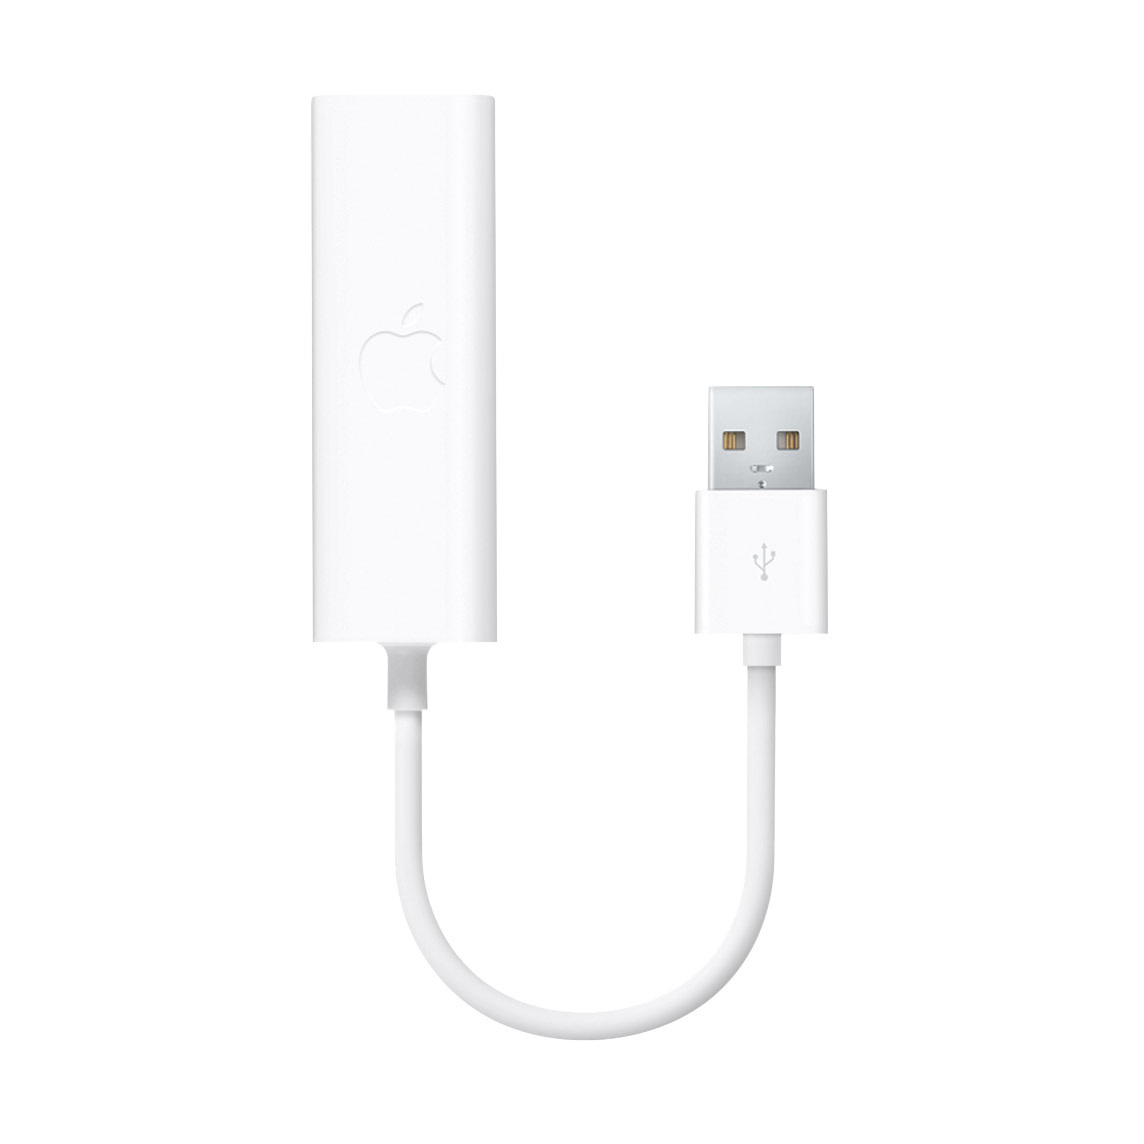 Apple Apple USB Ethernet Adapter MC704LL/A